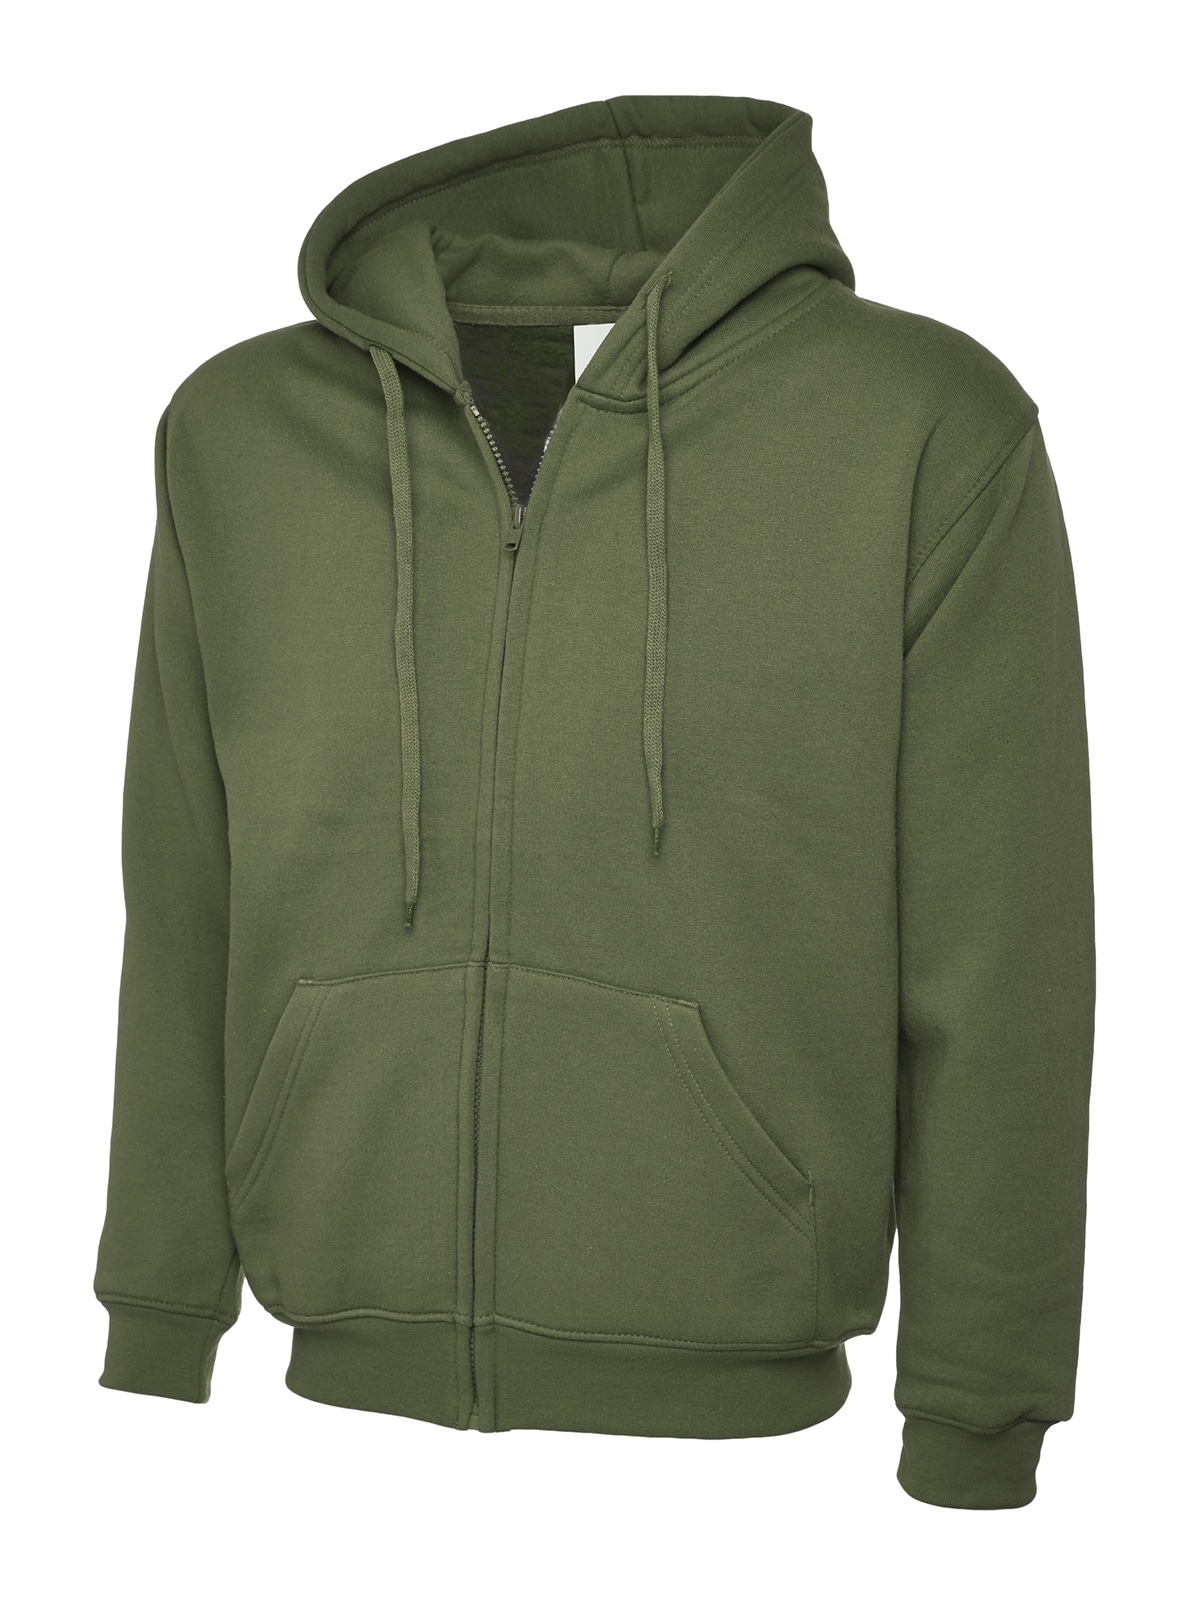 Uneek  Classic Full Zip Hooded Sweatshirt - Unisex Fit